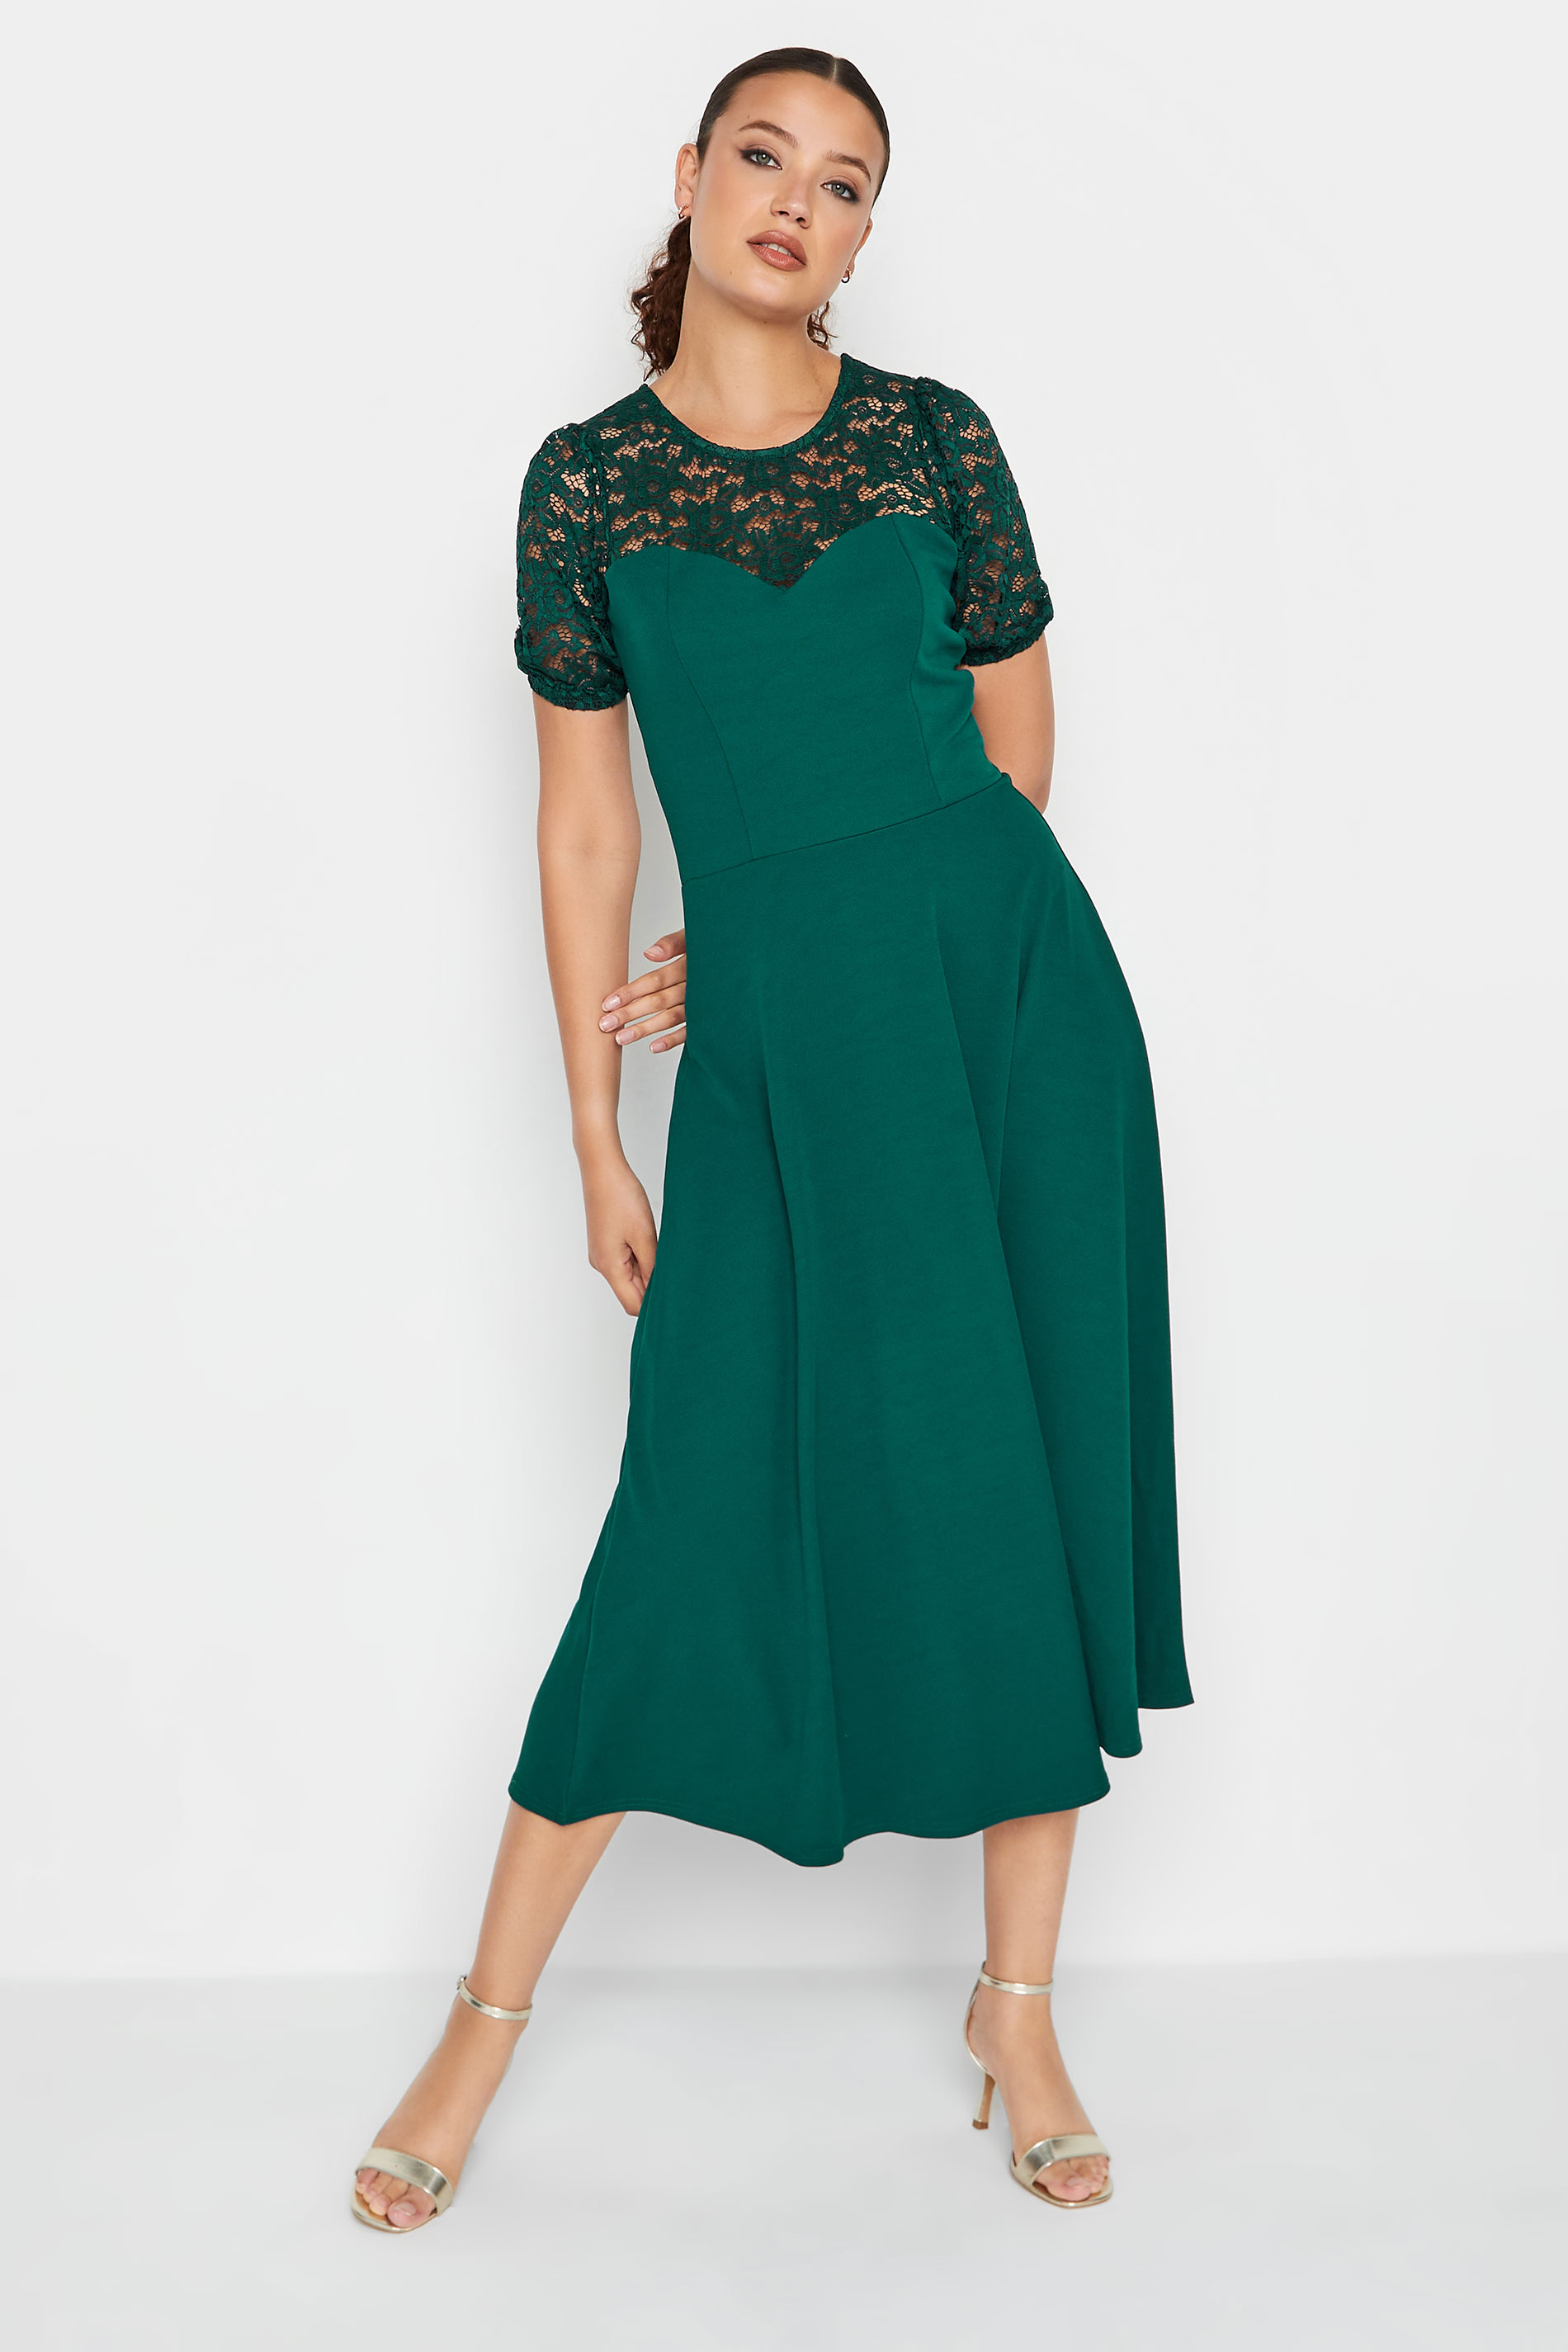 Tall Women's LTS Forest Green Lace Midi Dress | Long Tall Sally 1